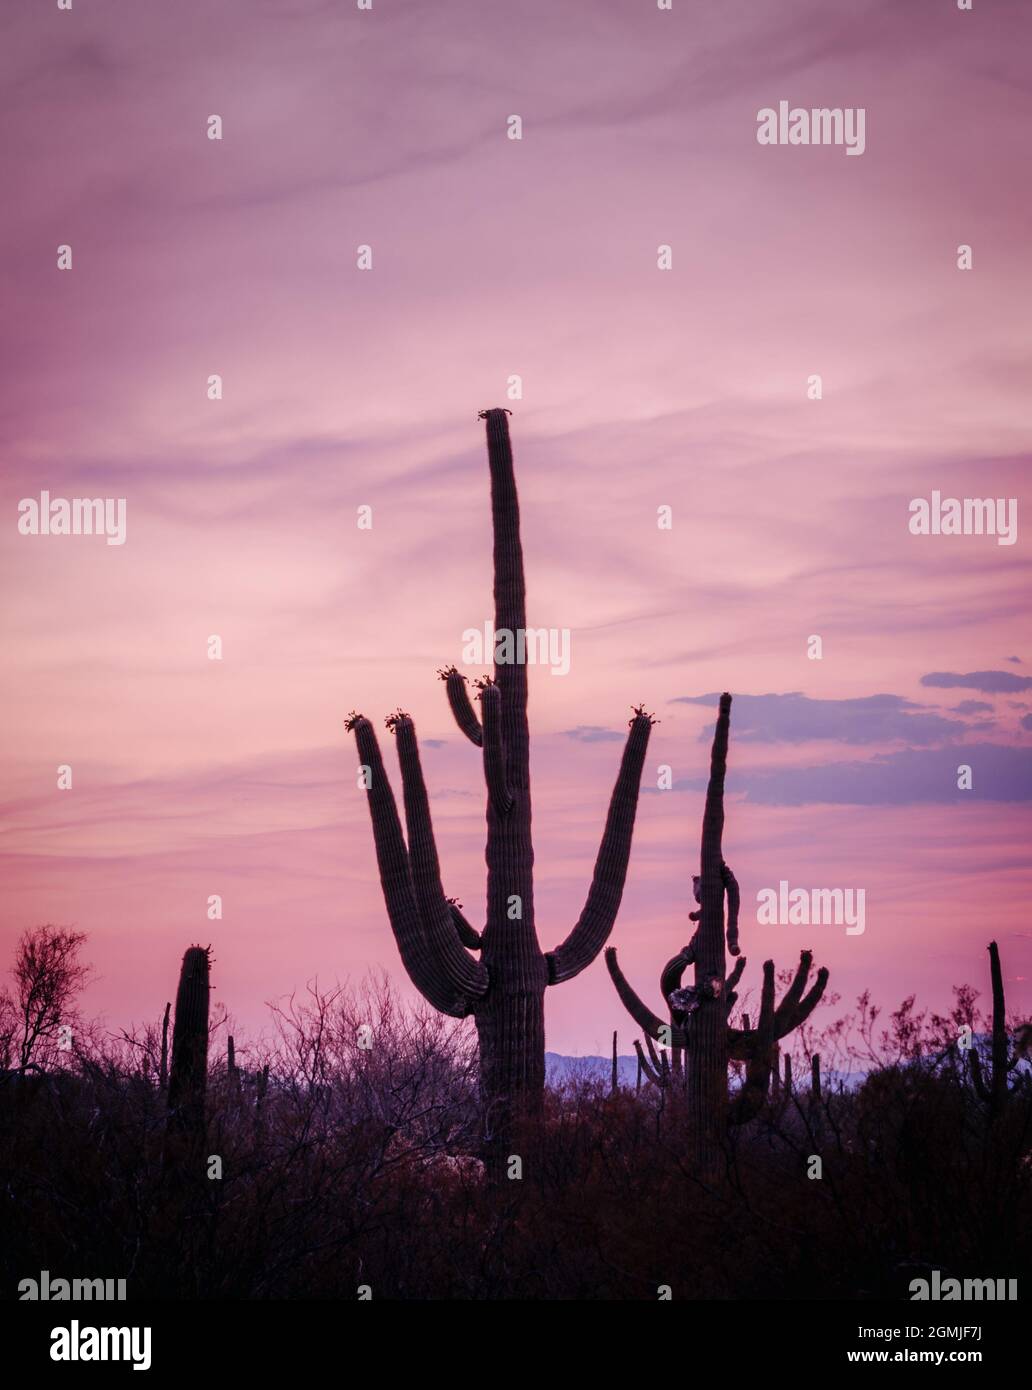 Cactus de silueta Saguaro en el desierto de Sonora, Arizona, con cielo púrpura al atardecer Foto de stock